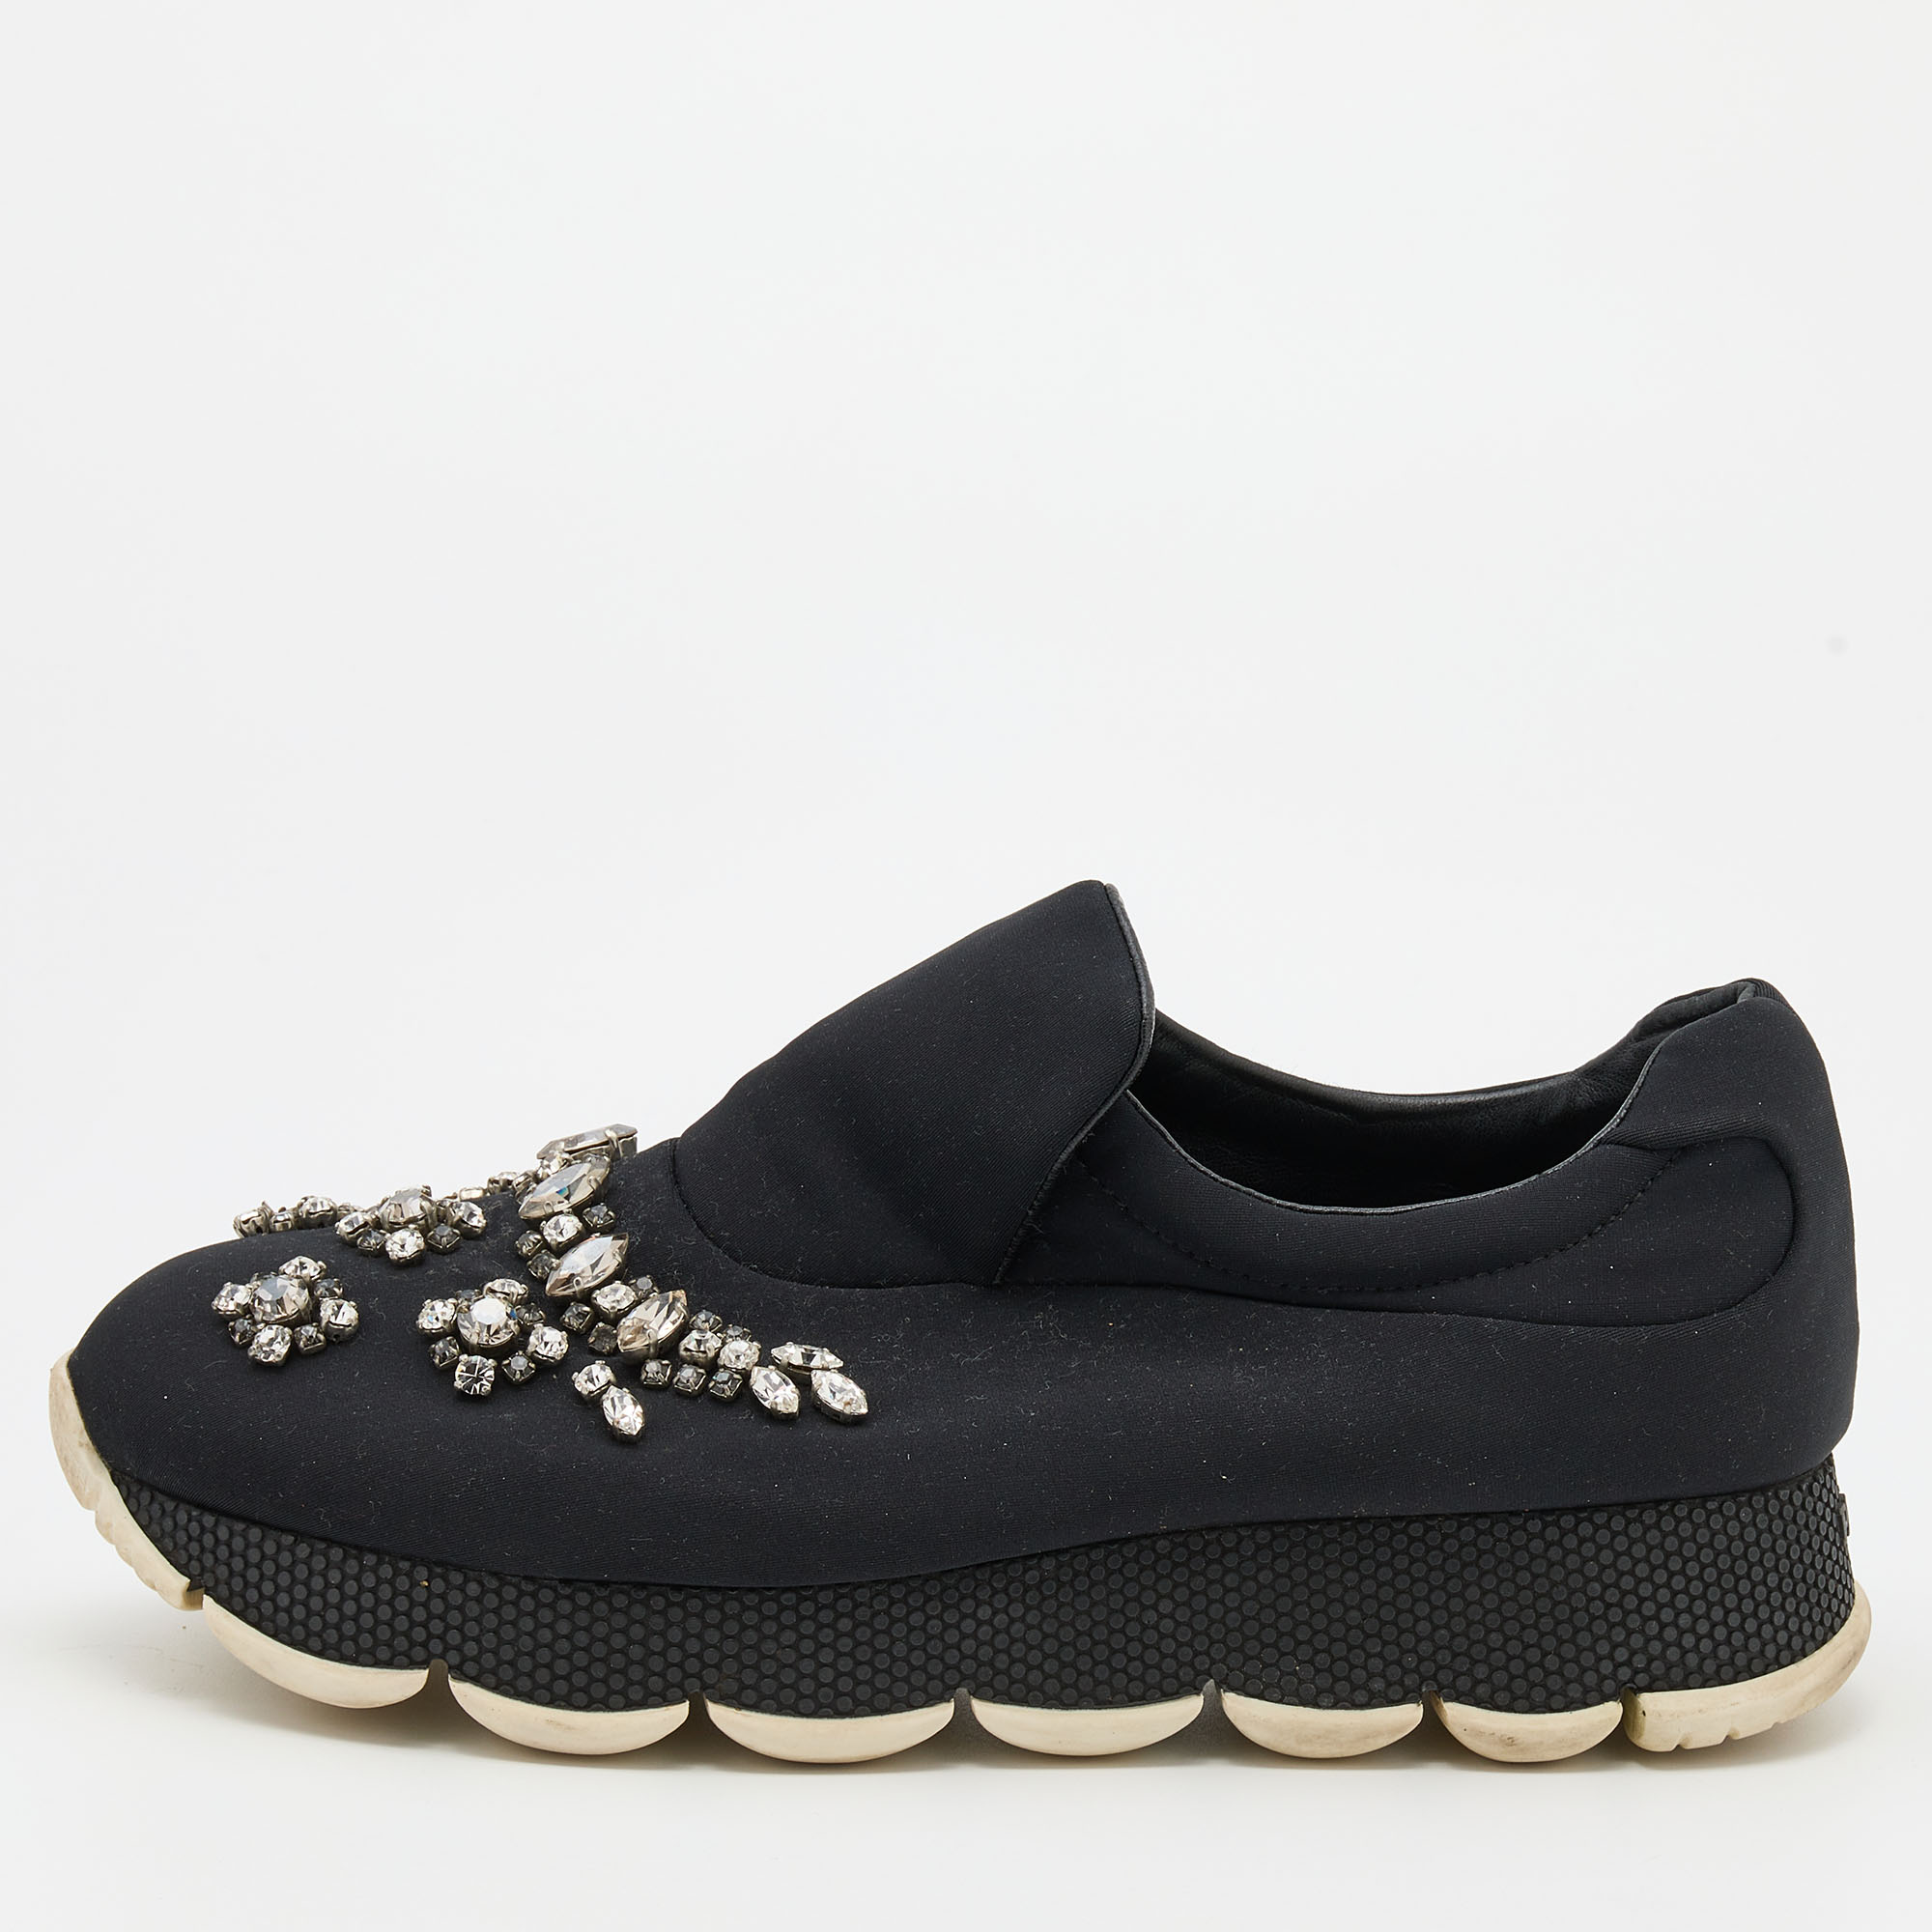 Prada Black Neoprene Embellished Slip On Sneakers Size 36